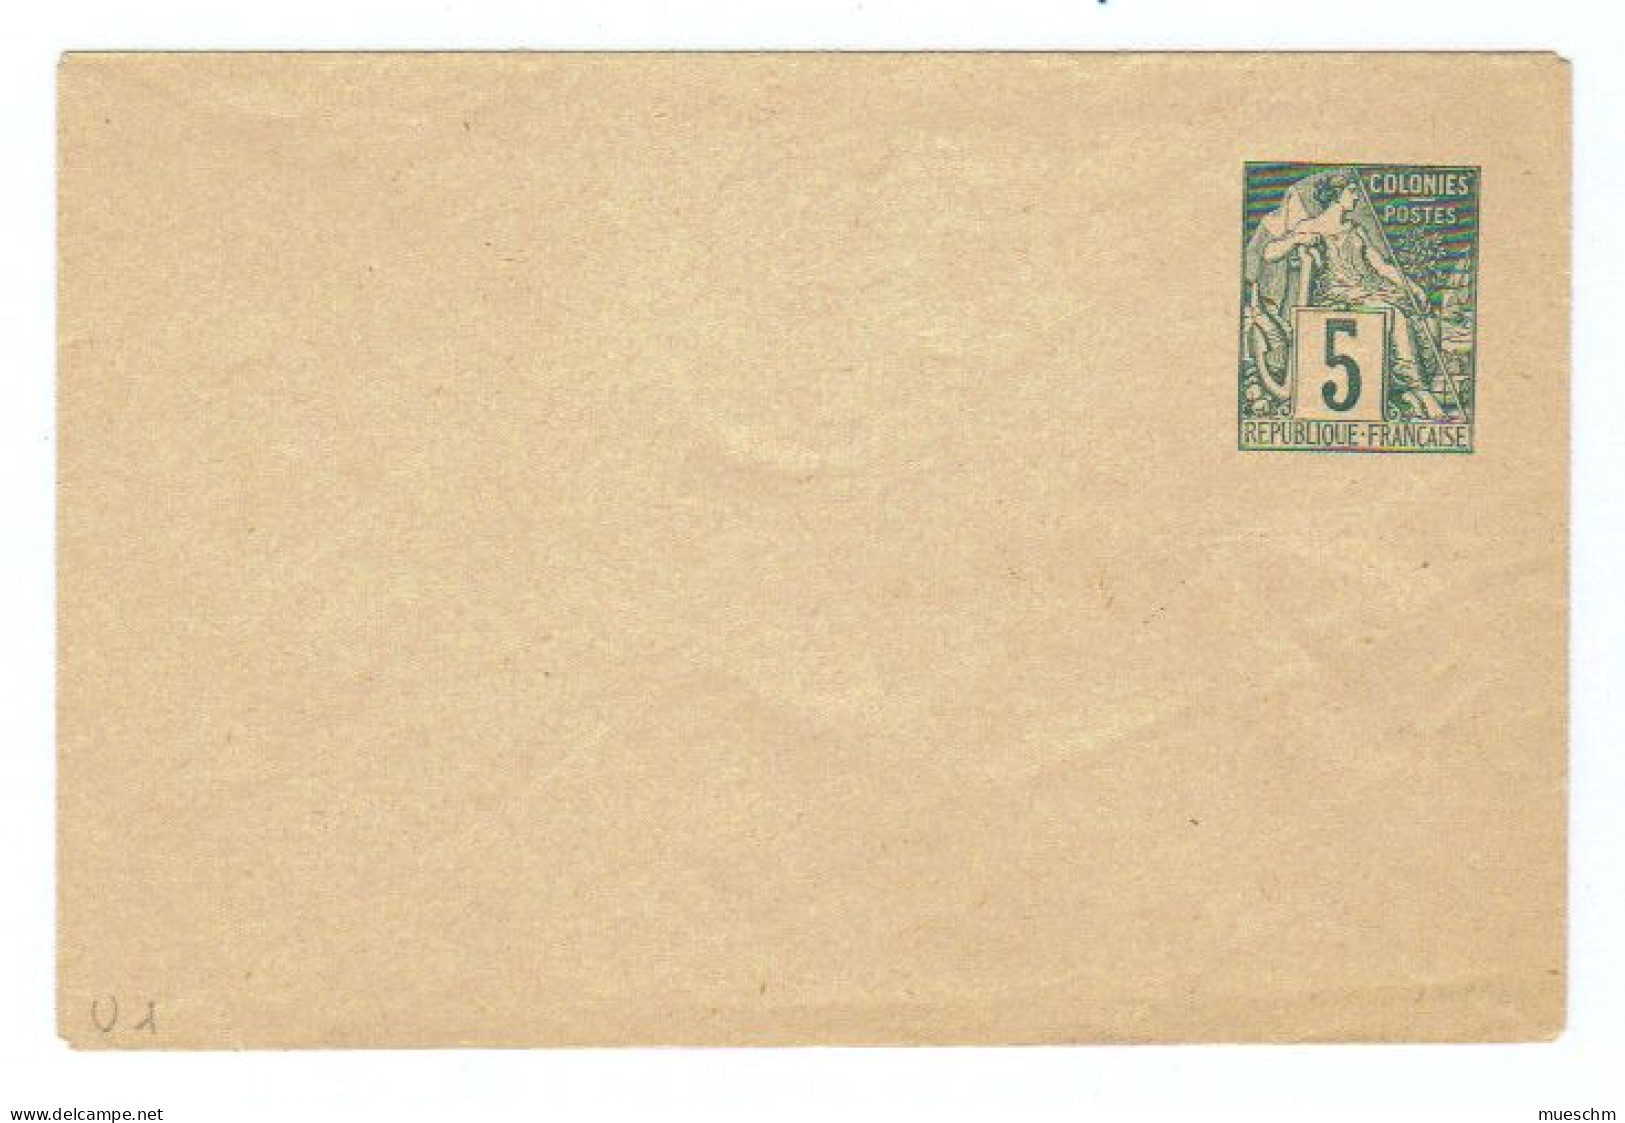 Frankreich/Kolonien, Ca.1900,  Ungebrauchtes Briefkuvert Mit Eingedr. Frankatur "Colonies Postes" (10155W) - Autres & Non Classés